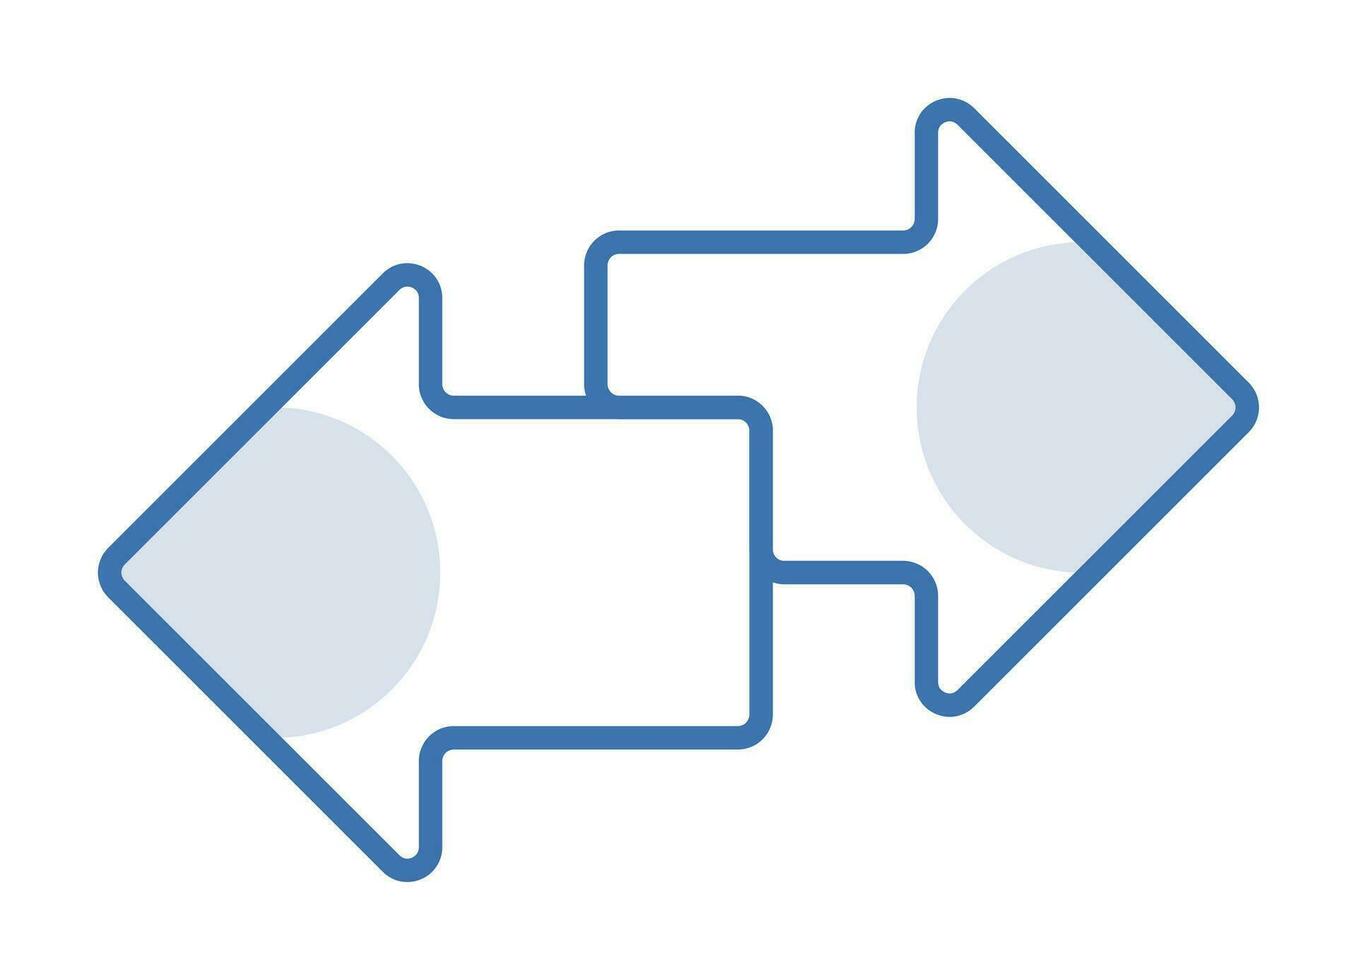 left right arrow icon, transfer symbol. Vector illustration for mobile app, web.